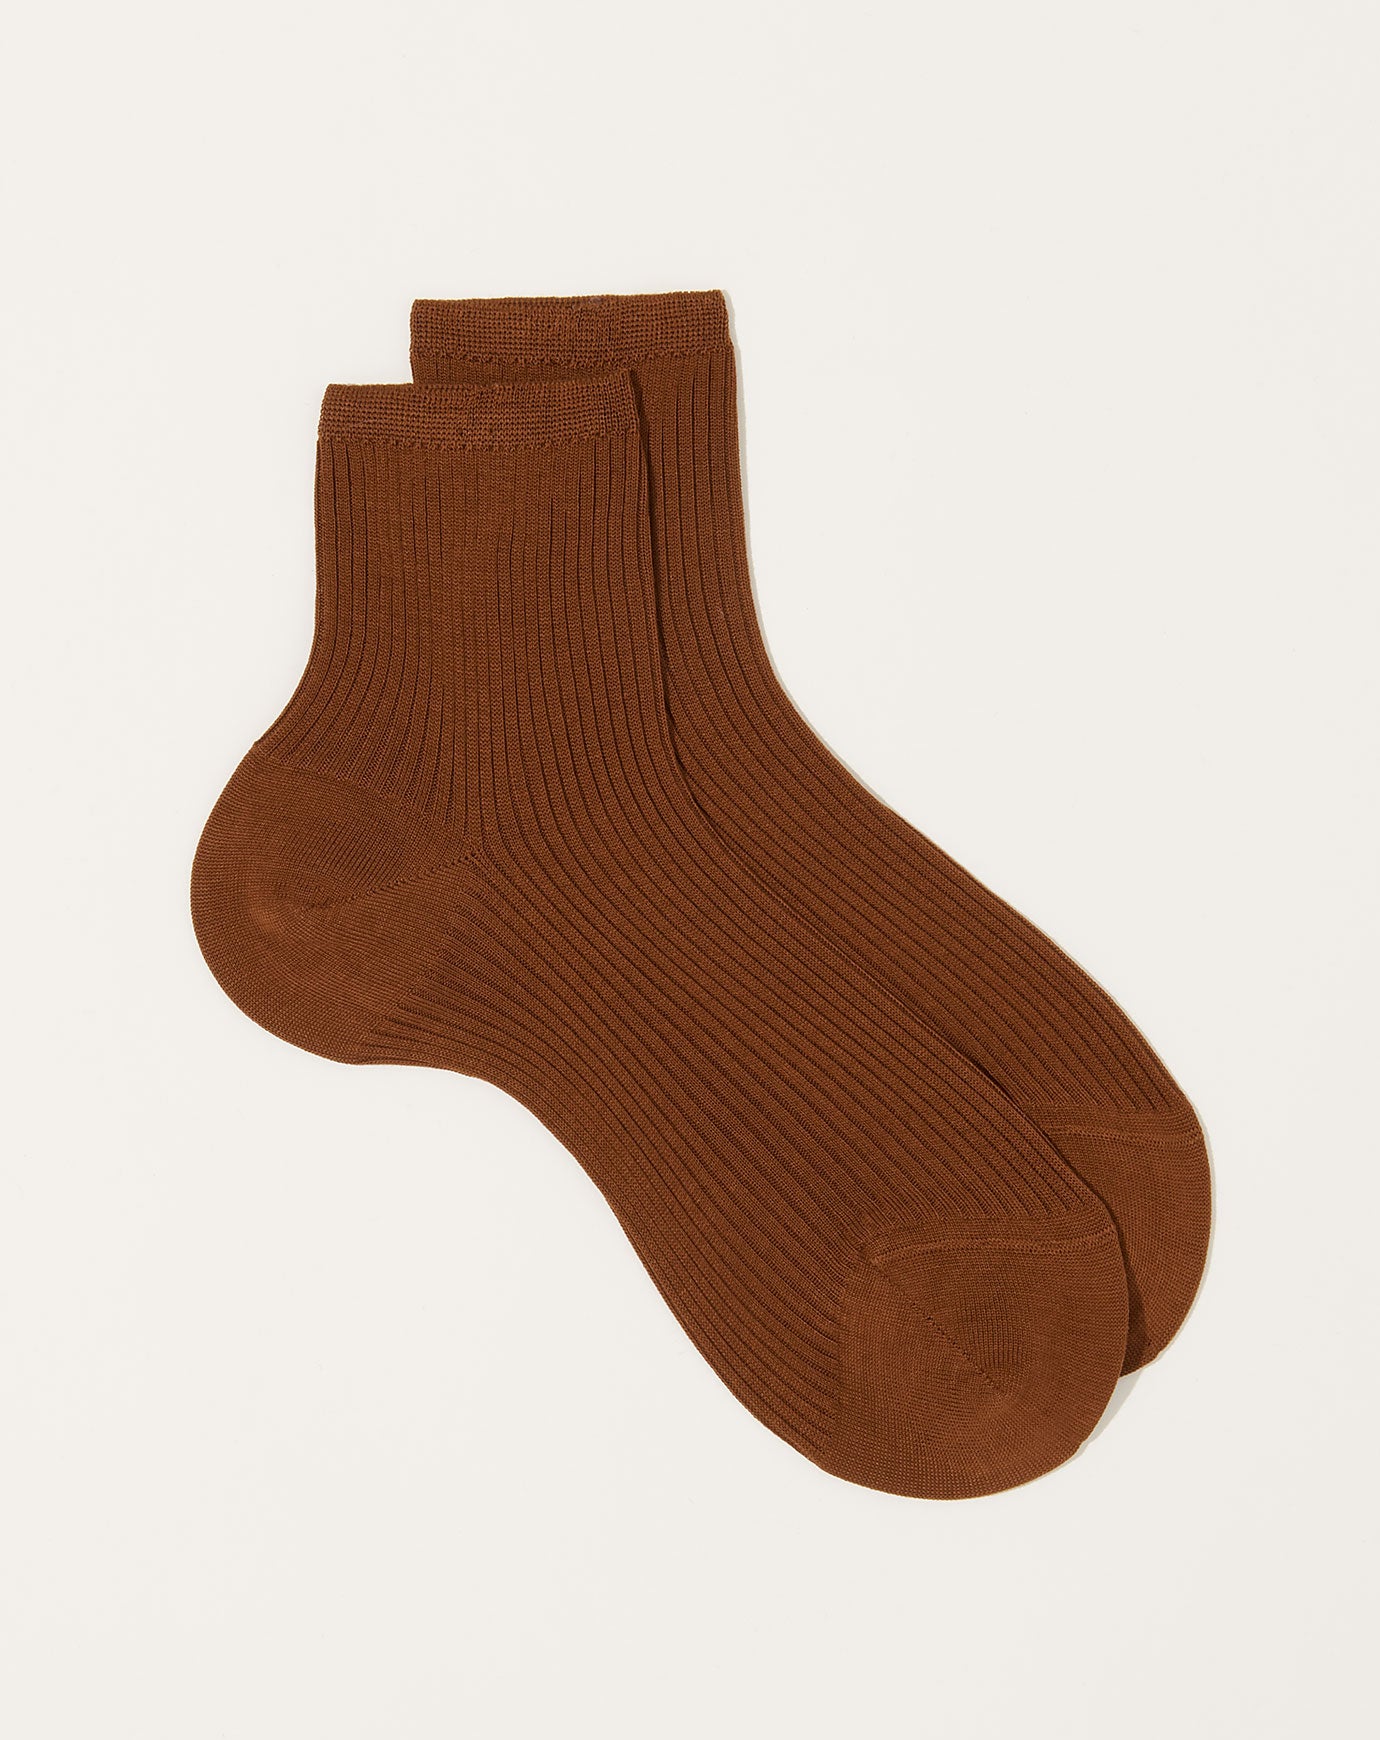 Maria La Rosa Ribbed Cotton Socks in Brown